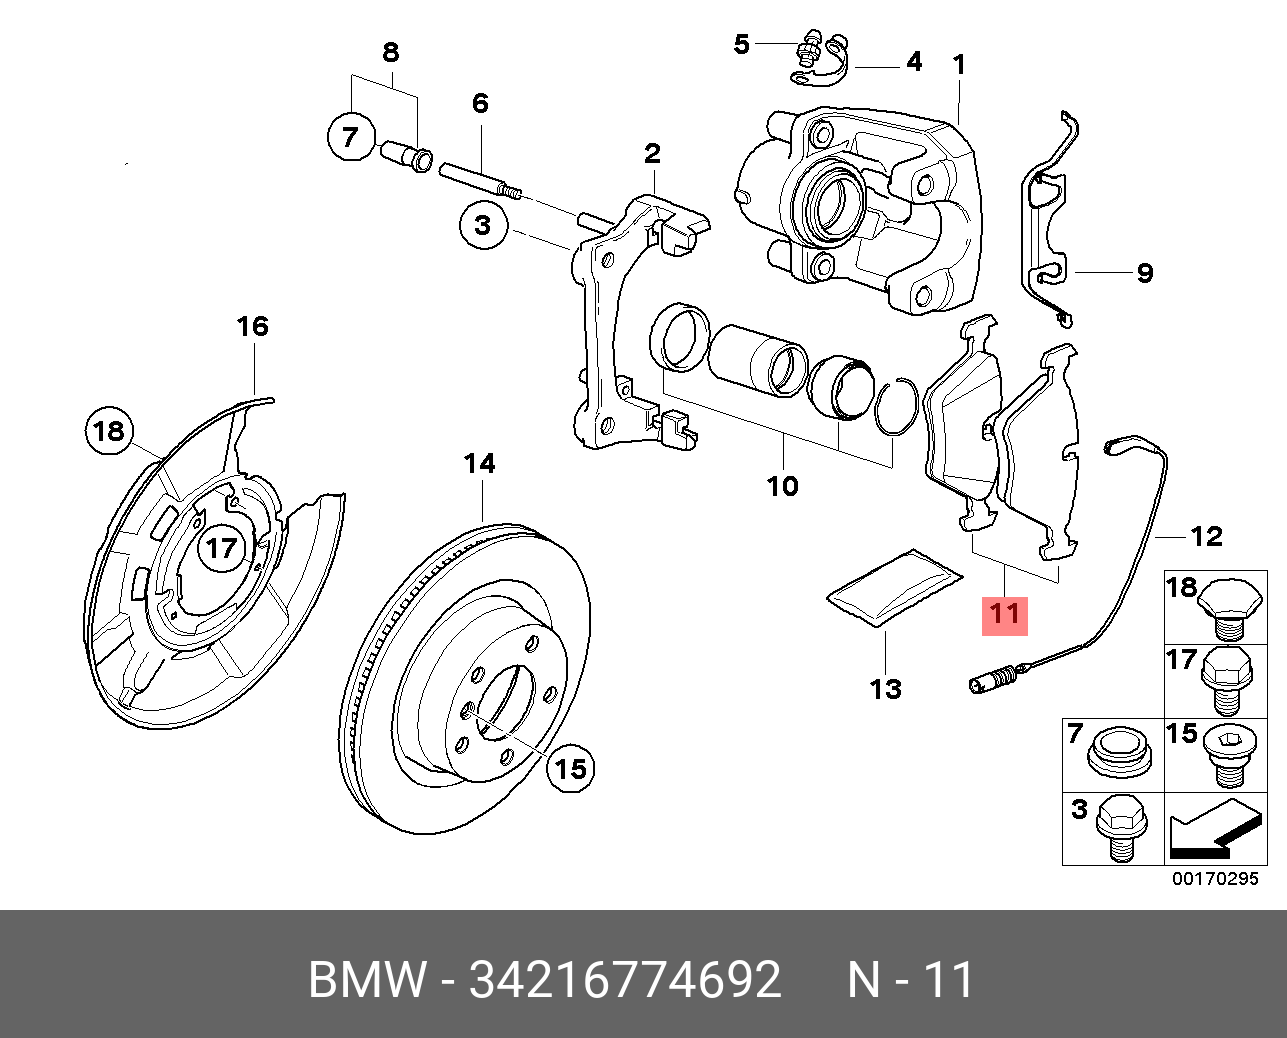 21 34 1 9. Задние тормозные колодки Performance для BMW e90. Схема передних тормозов БМВ е90. Направляющие тормозных колодок задние BMW e90. Задняя тормозная система БМВ Е 90.